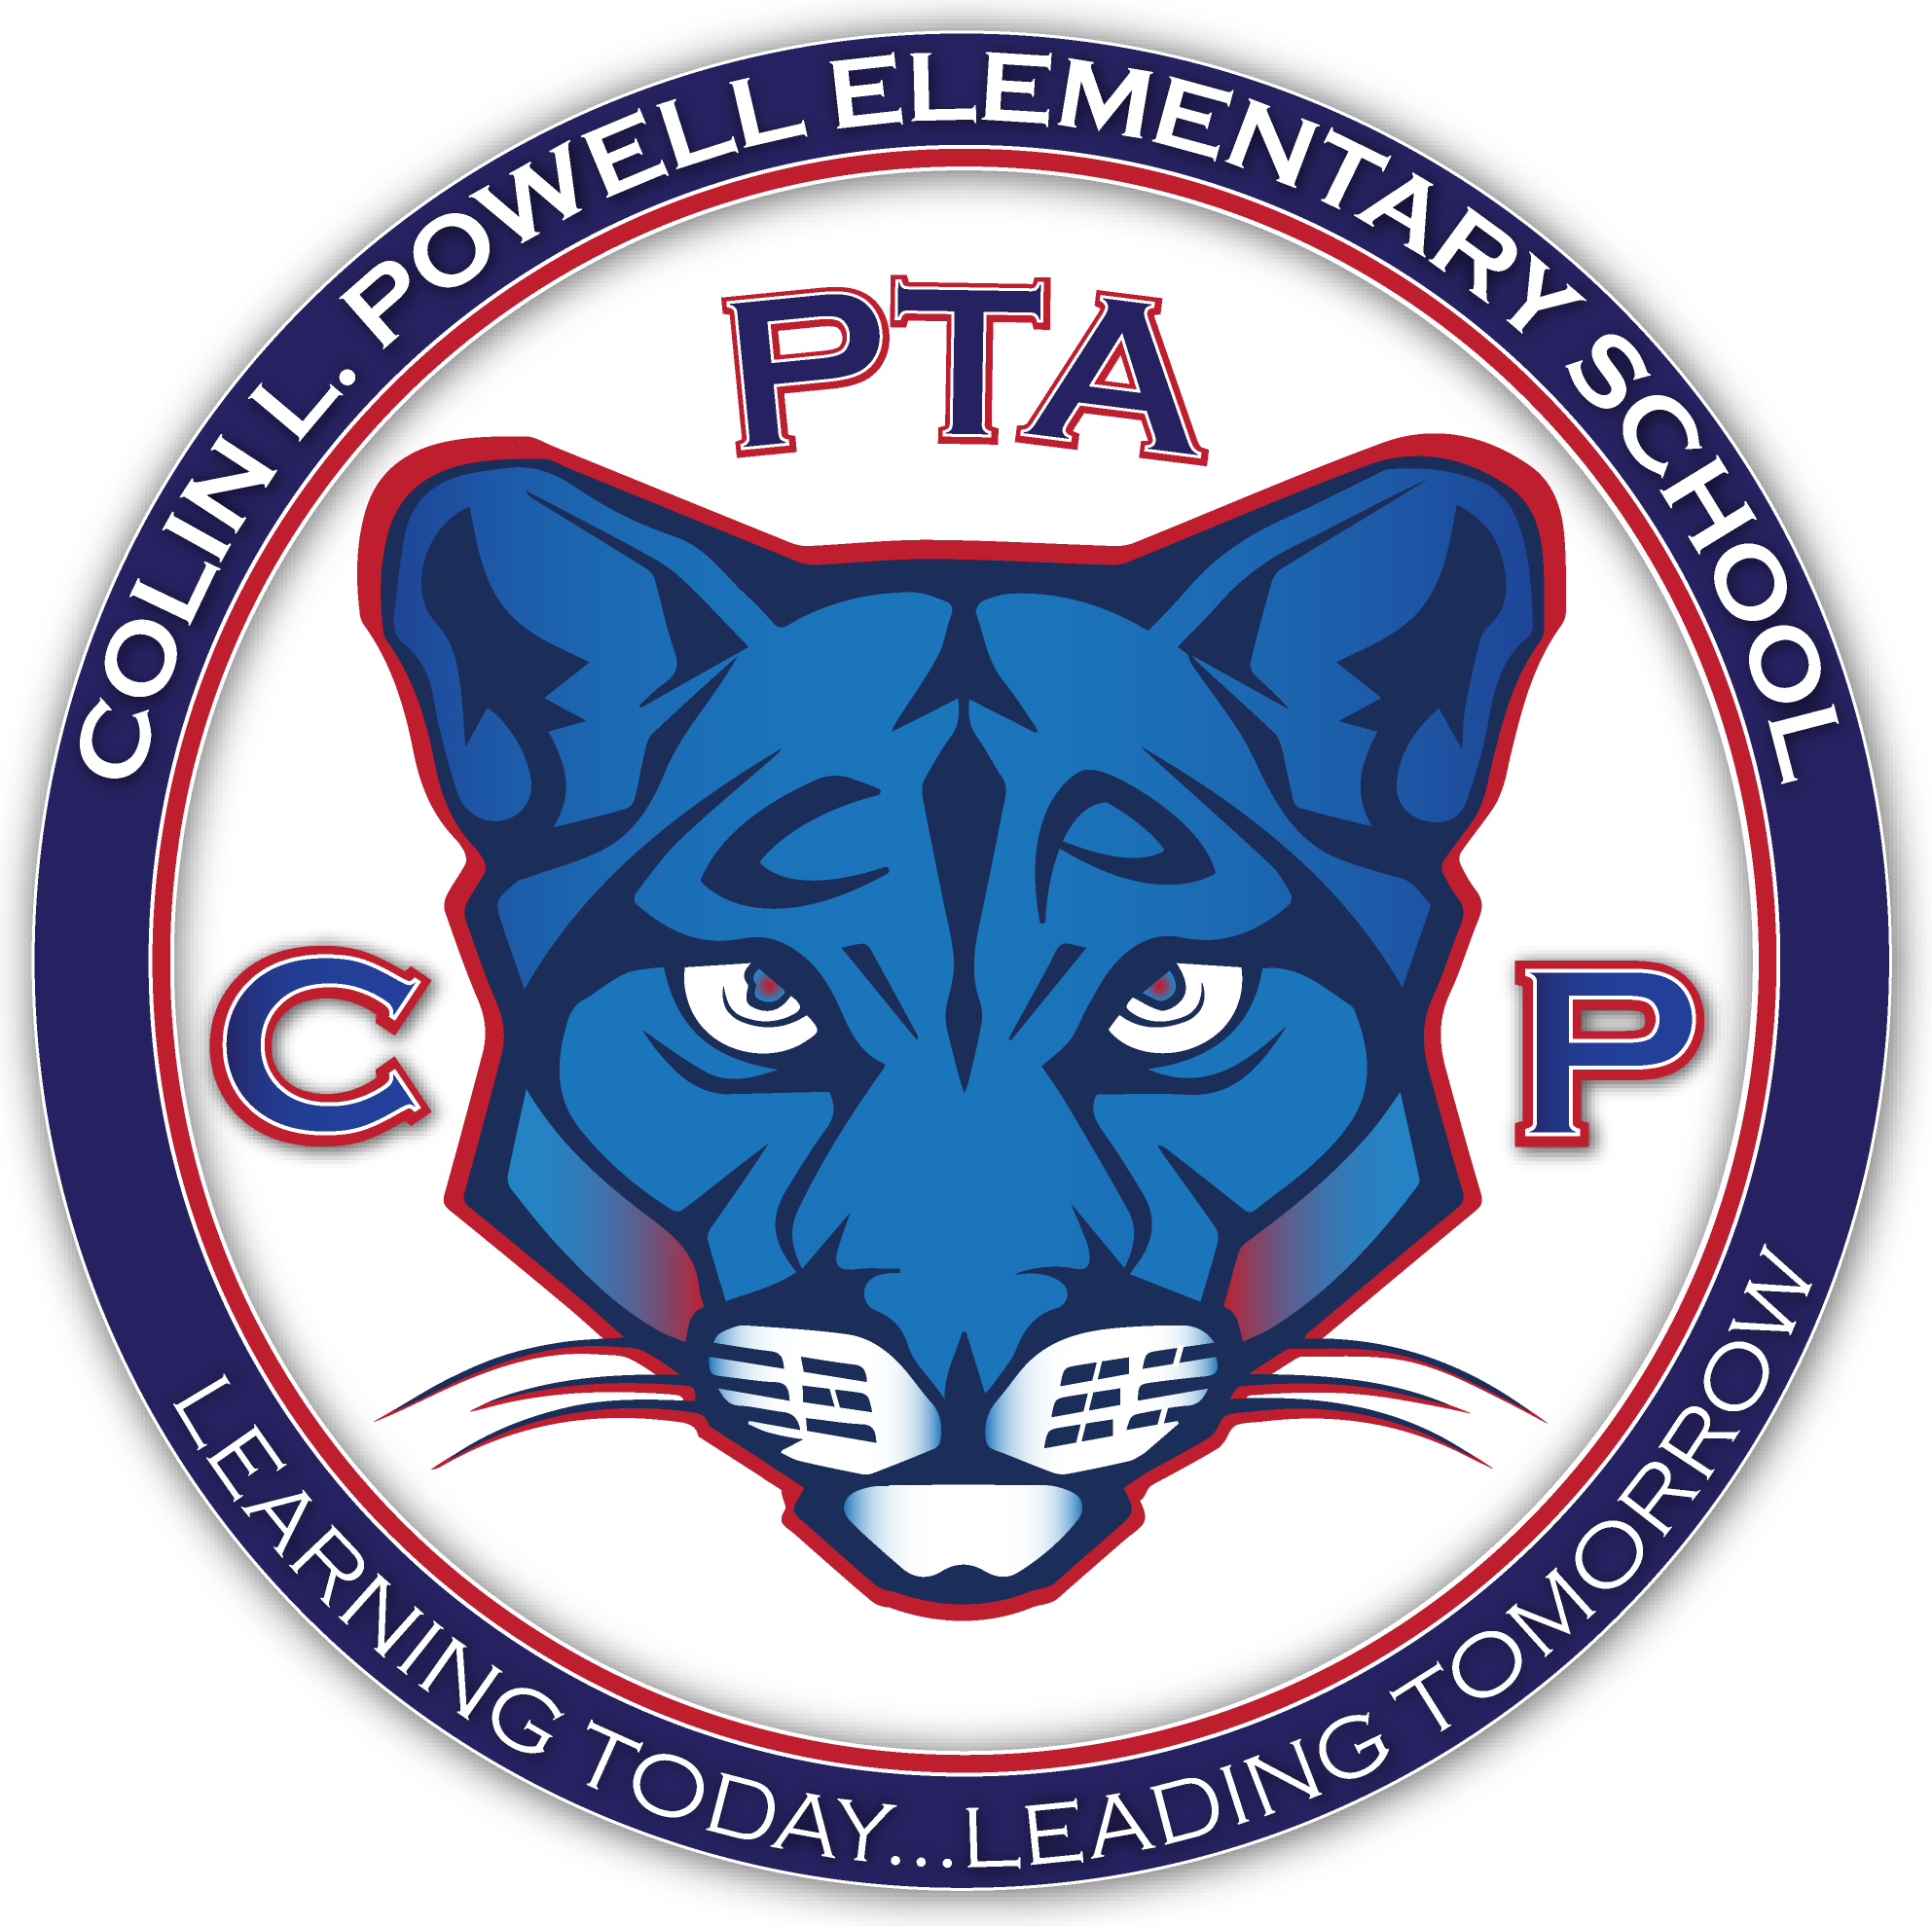 Colin Powell Elementary School PTA